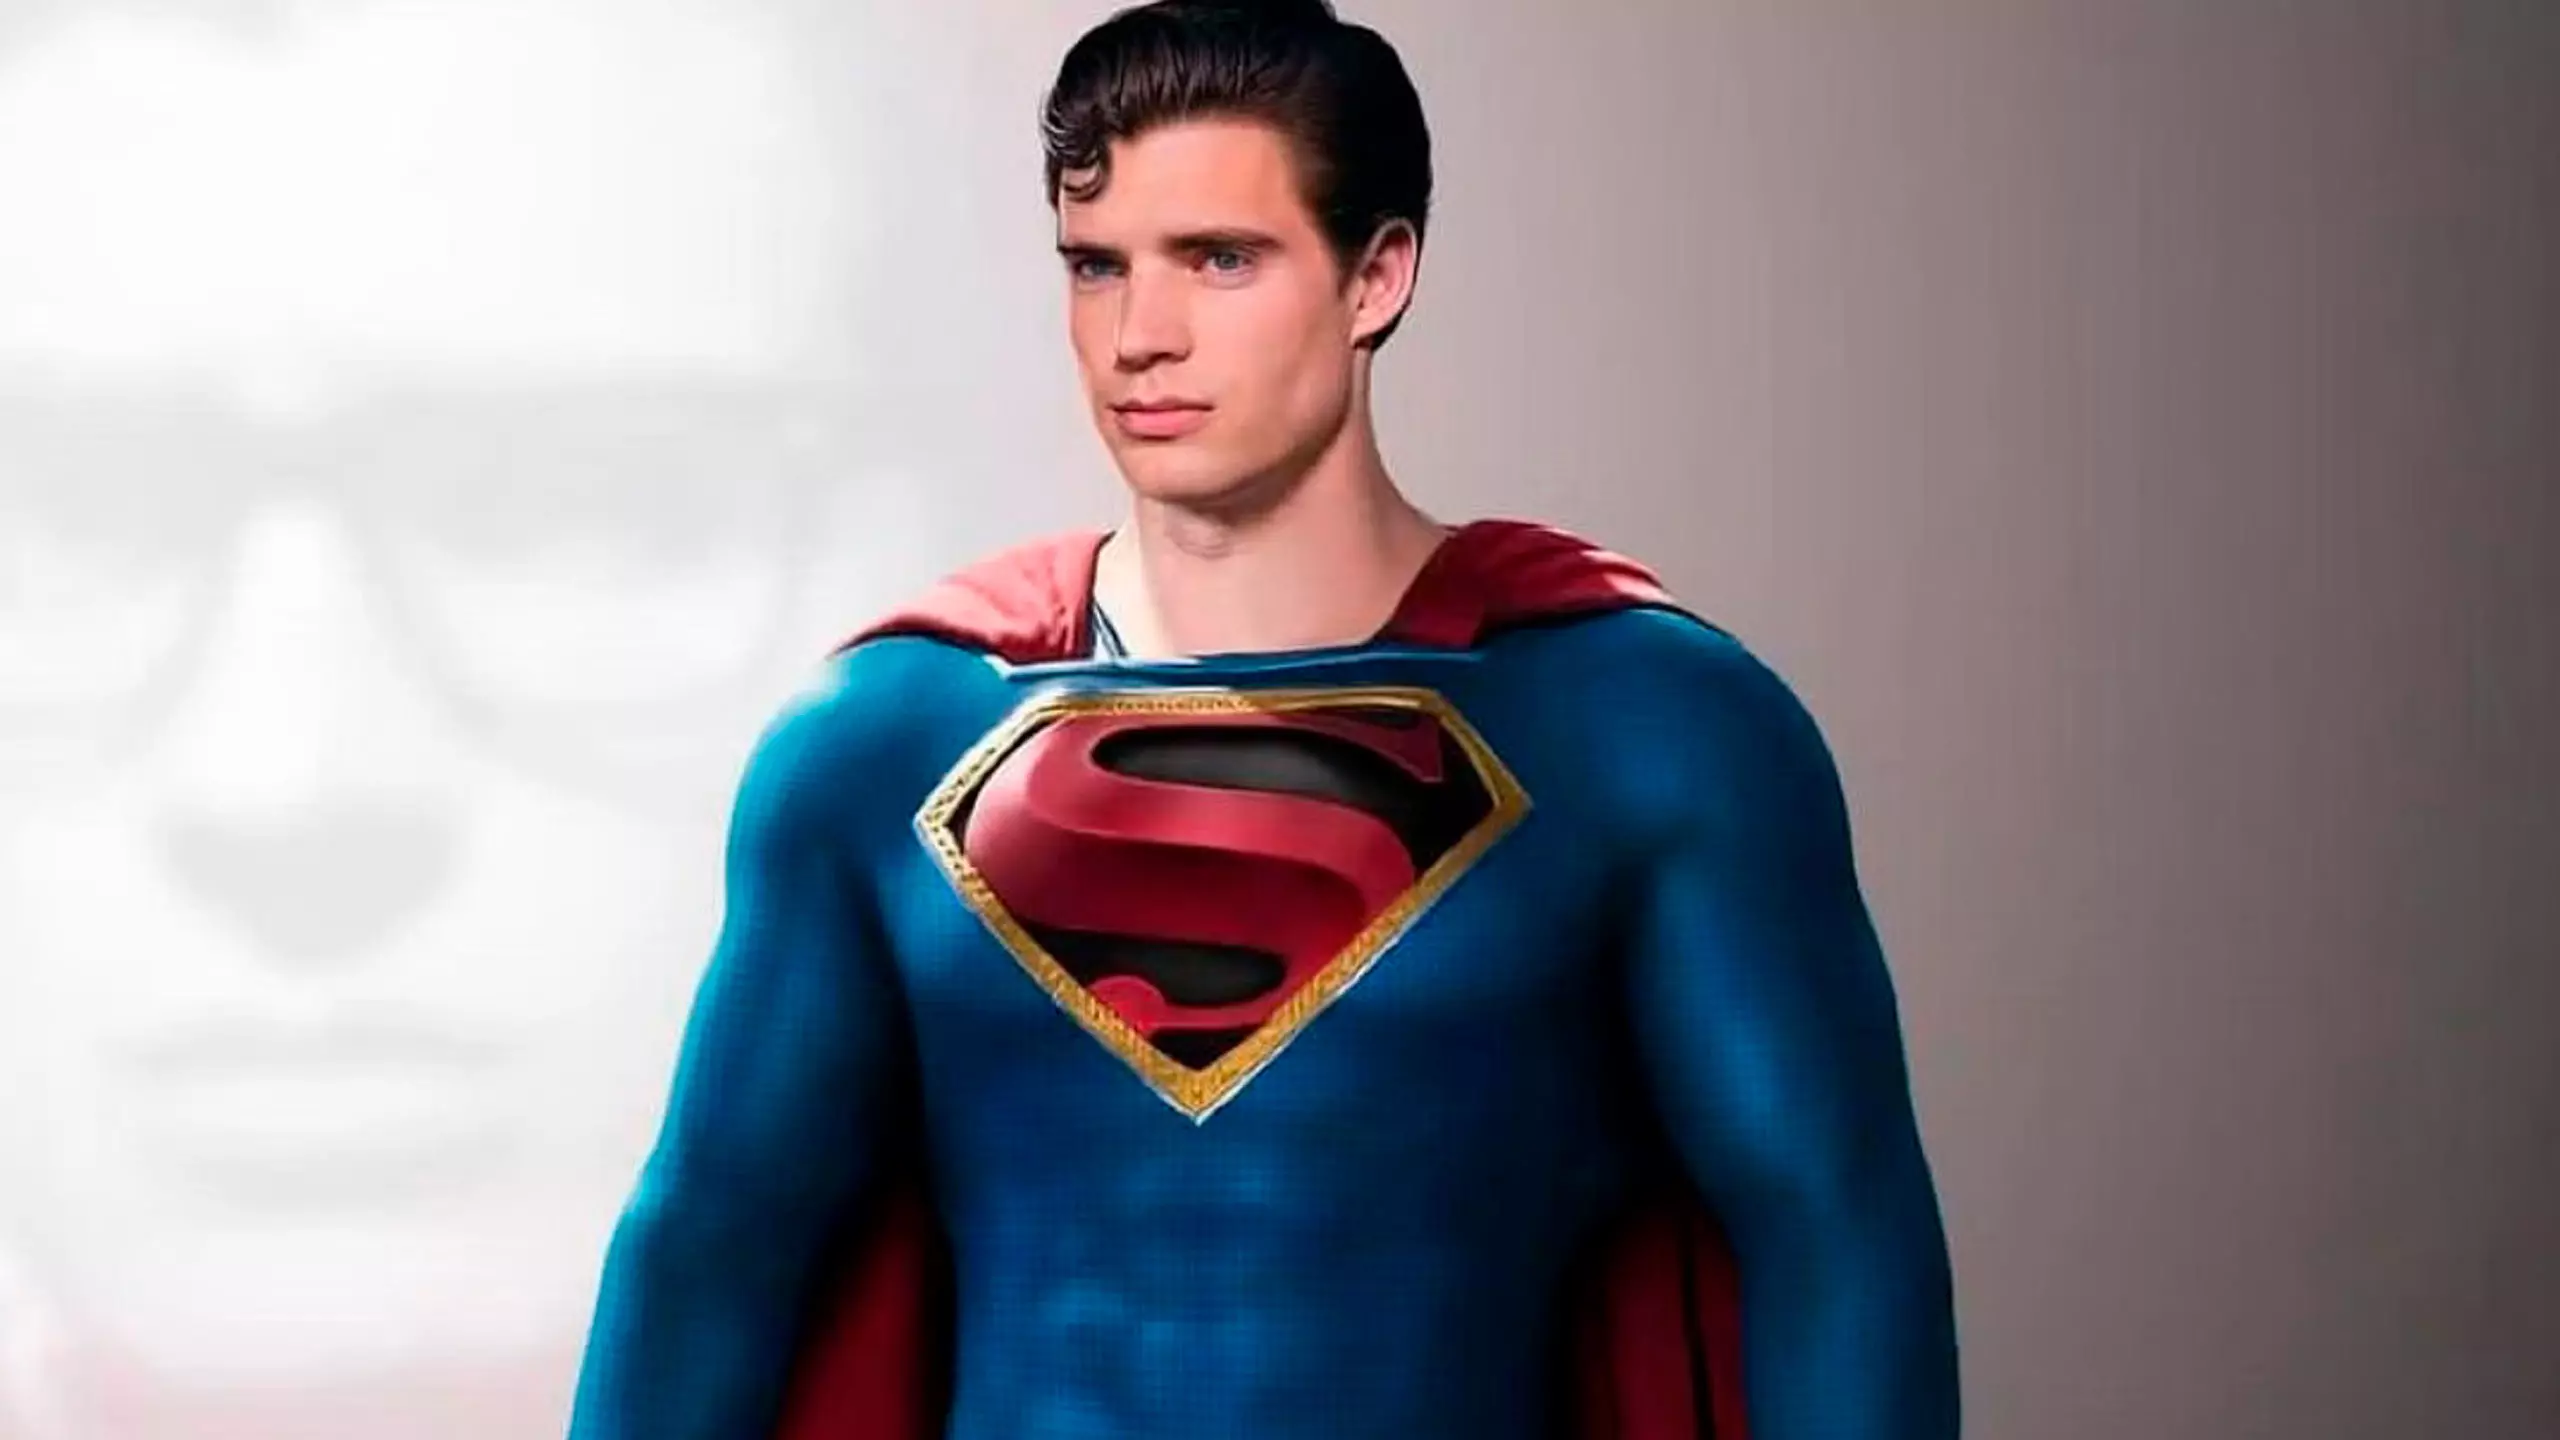 Superman legacy. Дэвид Коренсвет. Дэвид Коренсвет новый Супермен. Дэвид Коренсвет актер. Дэвид Коренсвет в костюме Супермена.